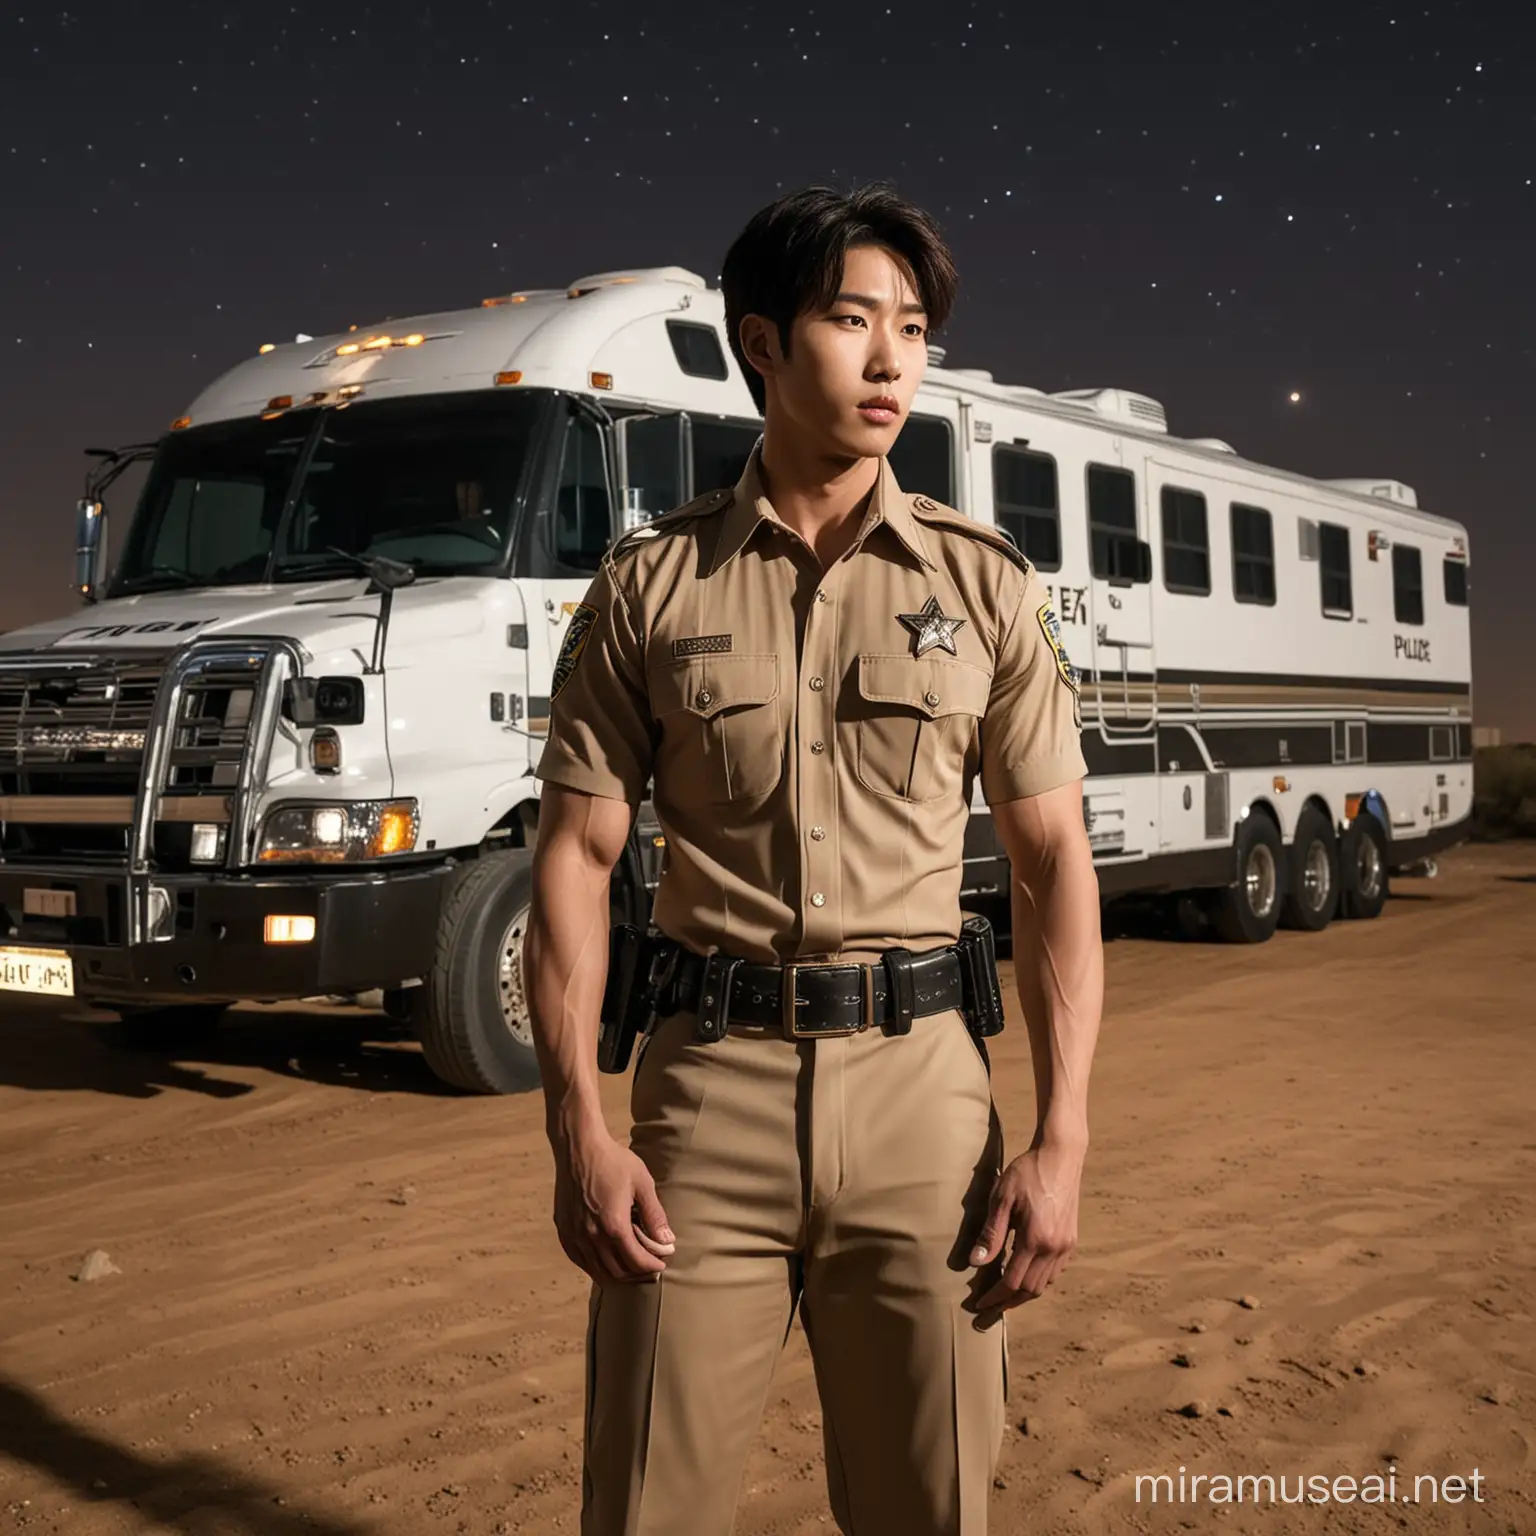 Vert Tall muscular huge boner Korean boy wearing sheriff uniform in desert at night next to police motor home 